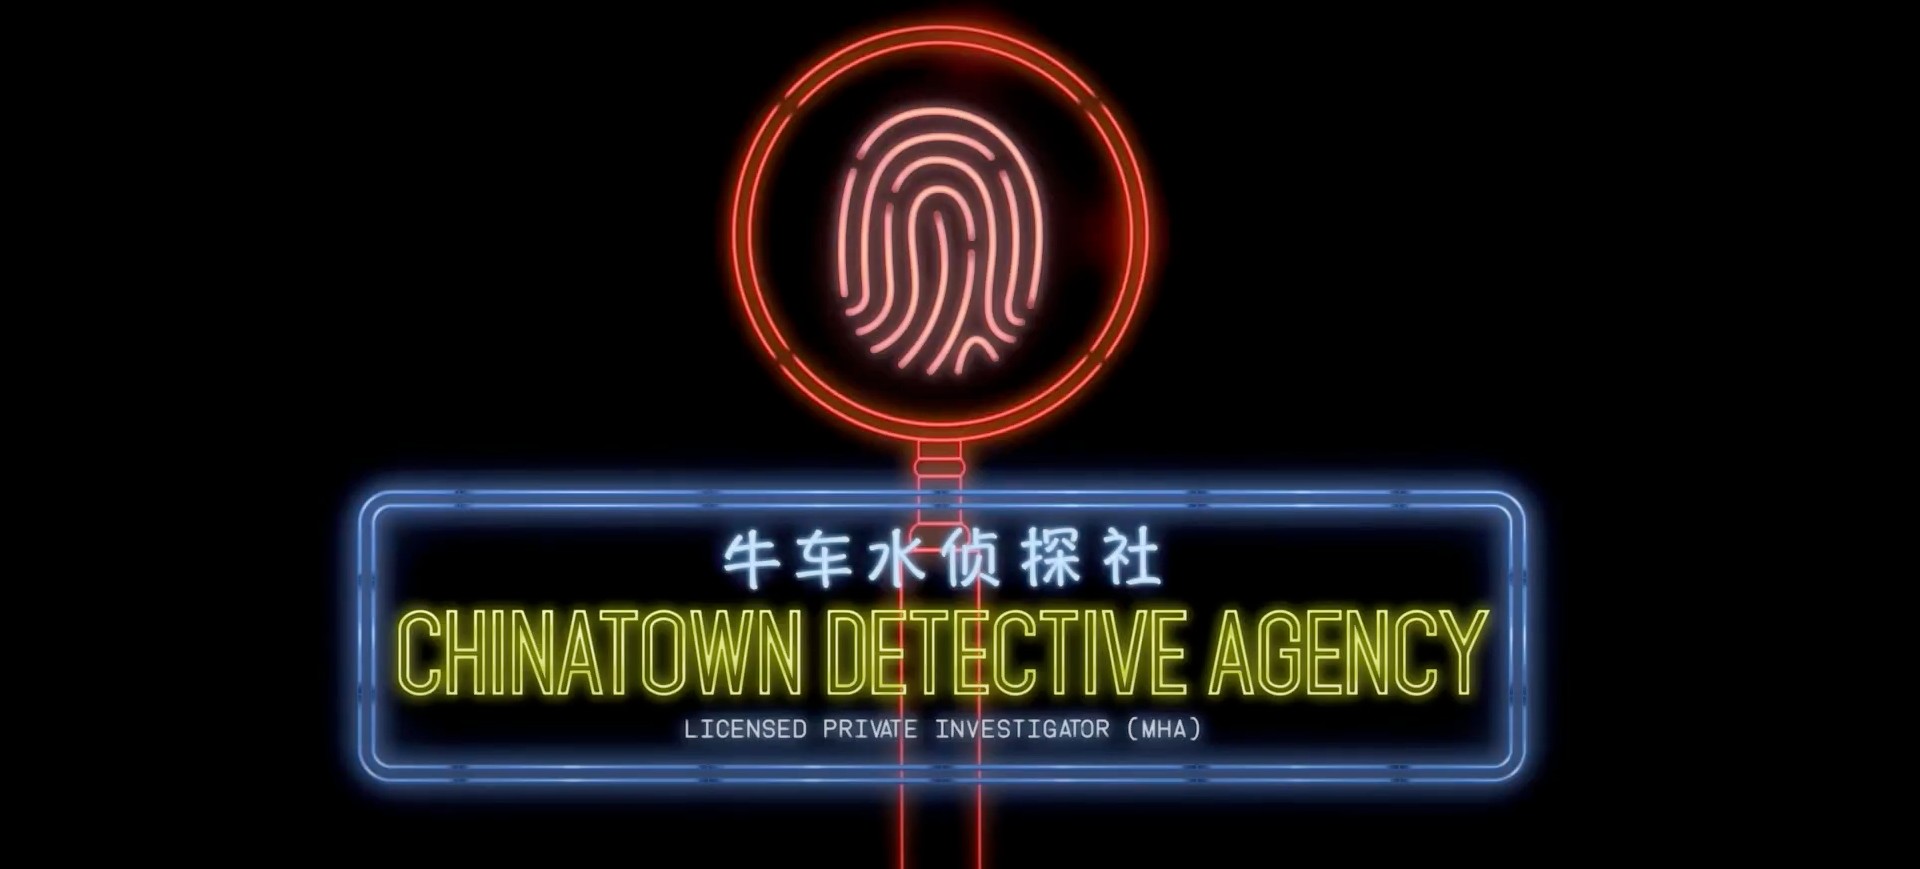 Captura do logotipo do game Chinatown Detective Agency, da General Interactive Co., inspirado no jogo Carmen Sandiego dos anos 1980